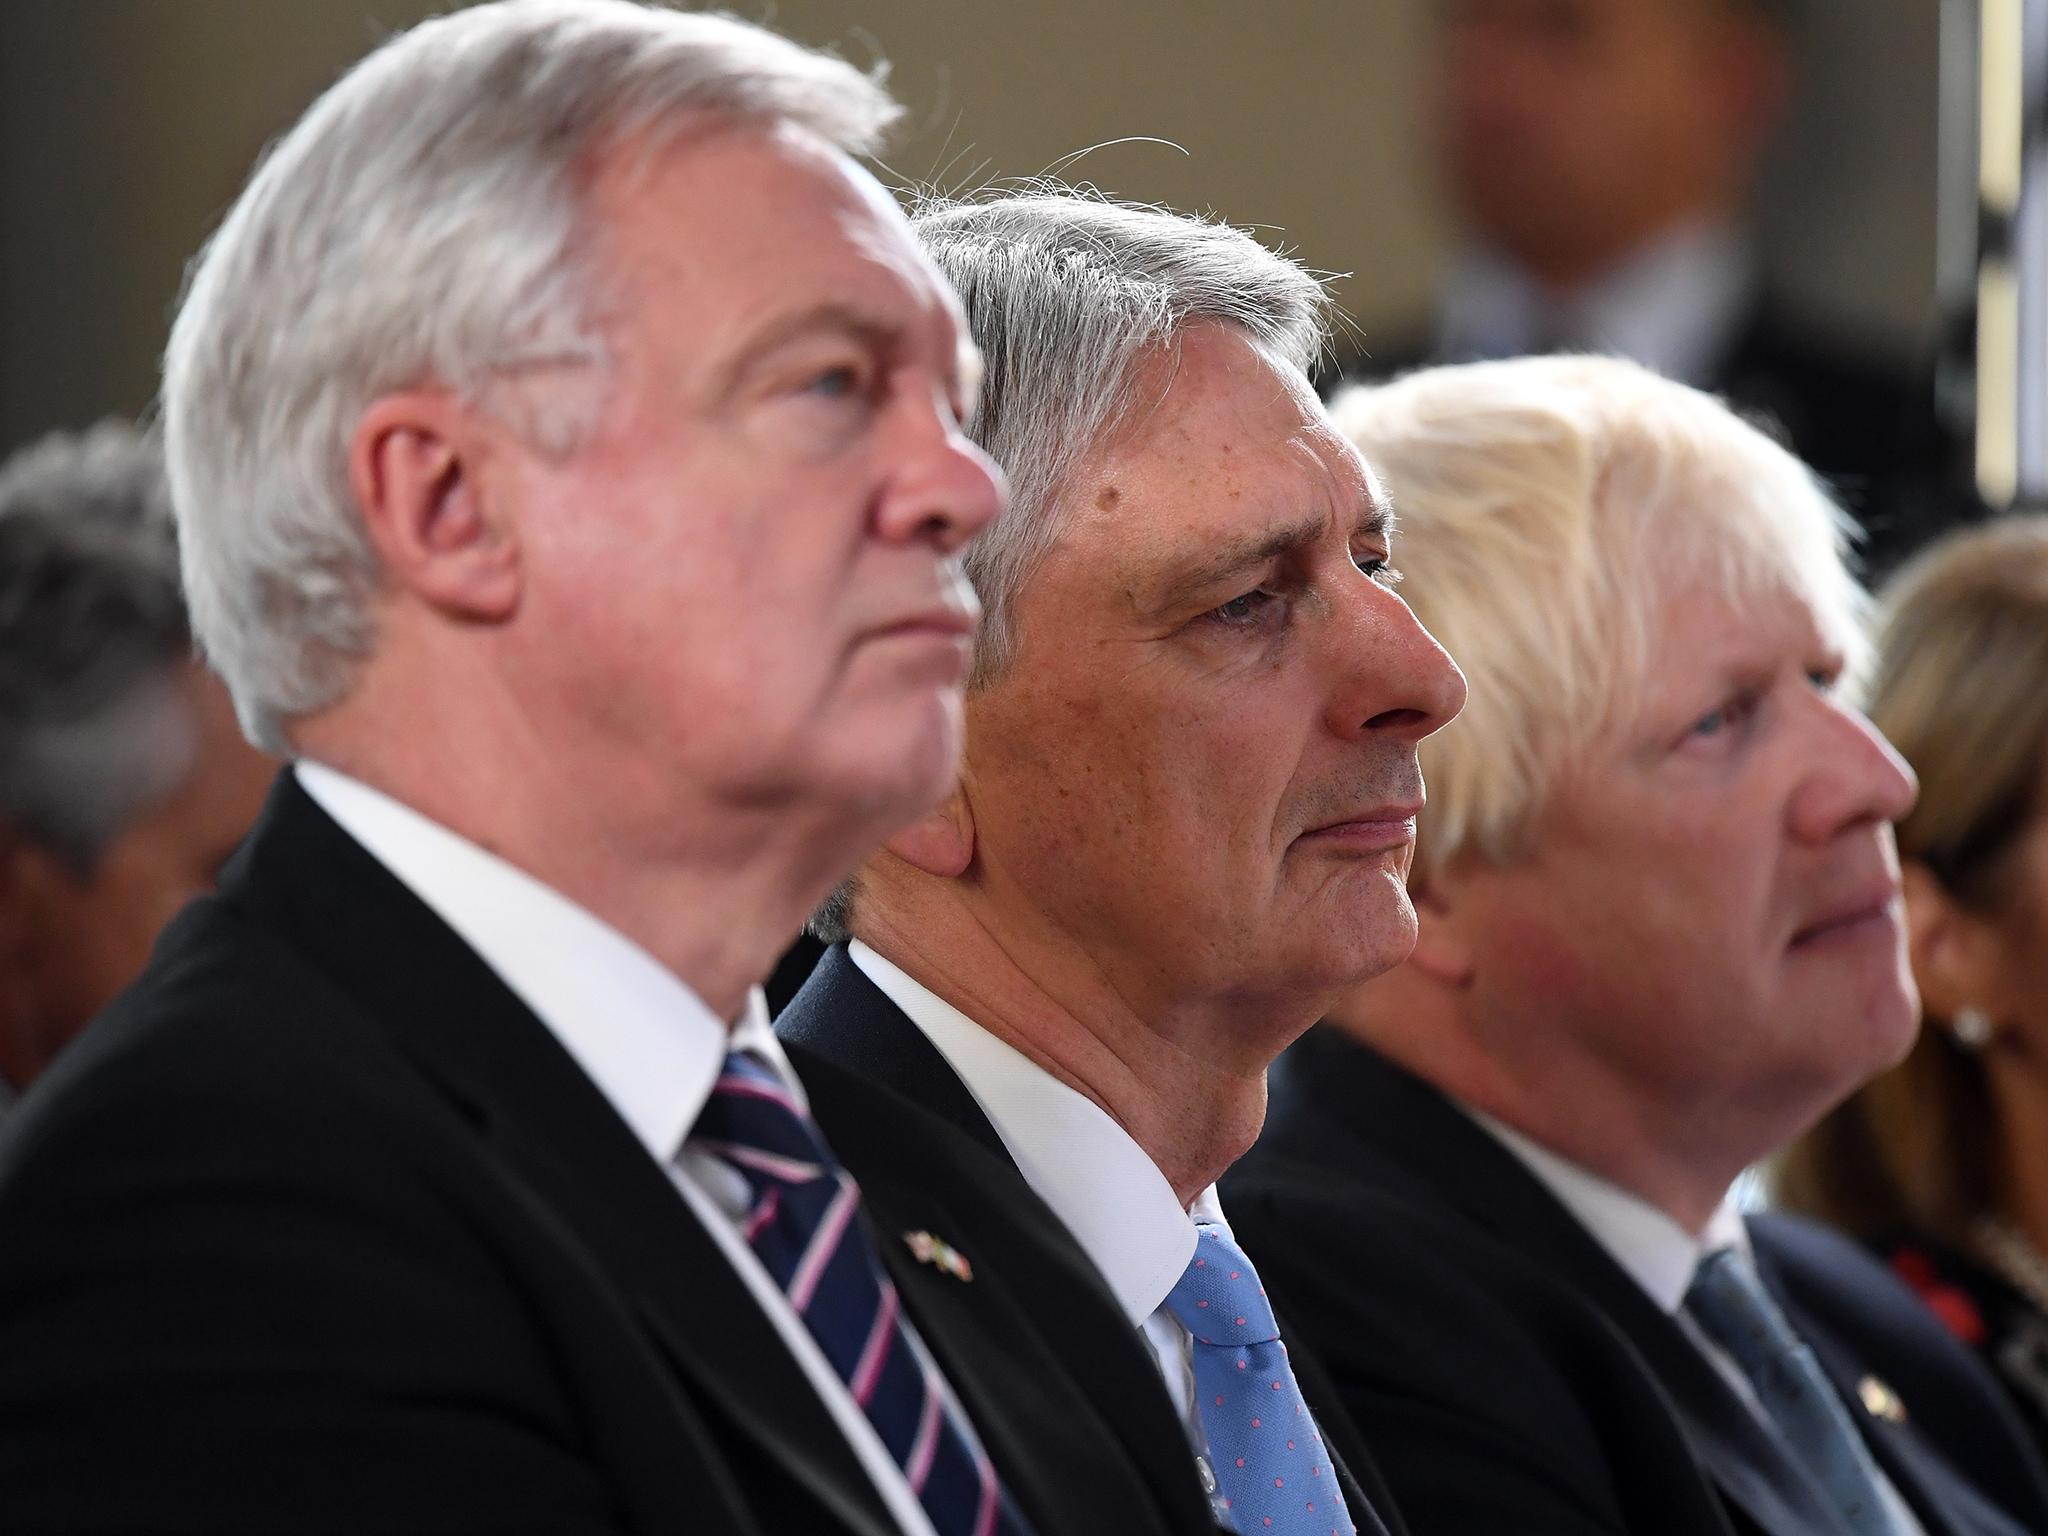 David Davis, Philip Hammond and Boris Johnson listen with intent to Theresa May's Brexit speech